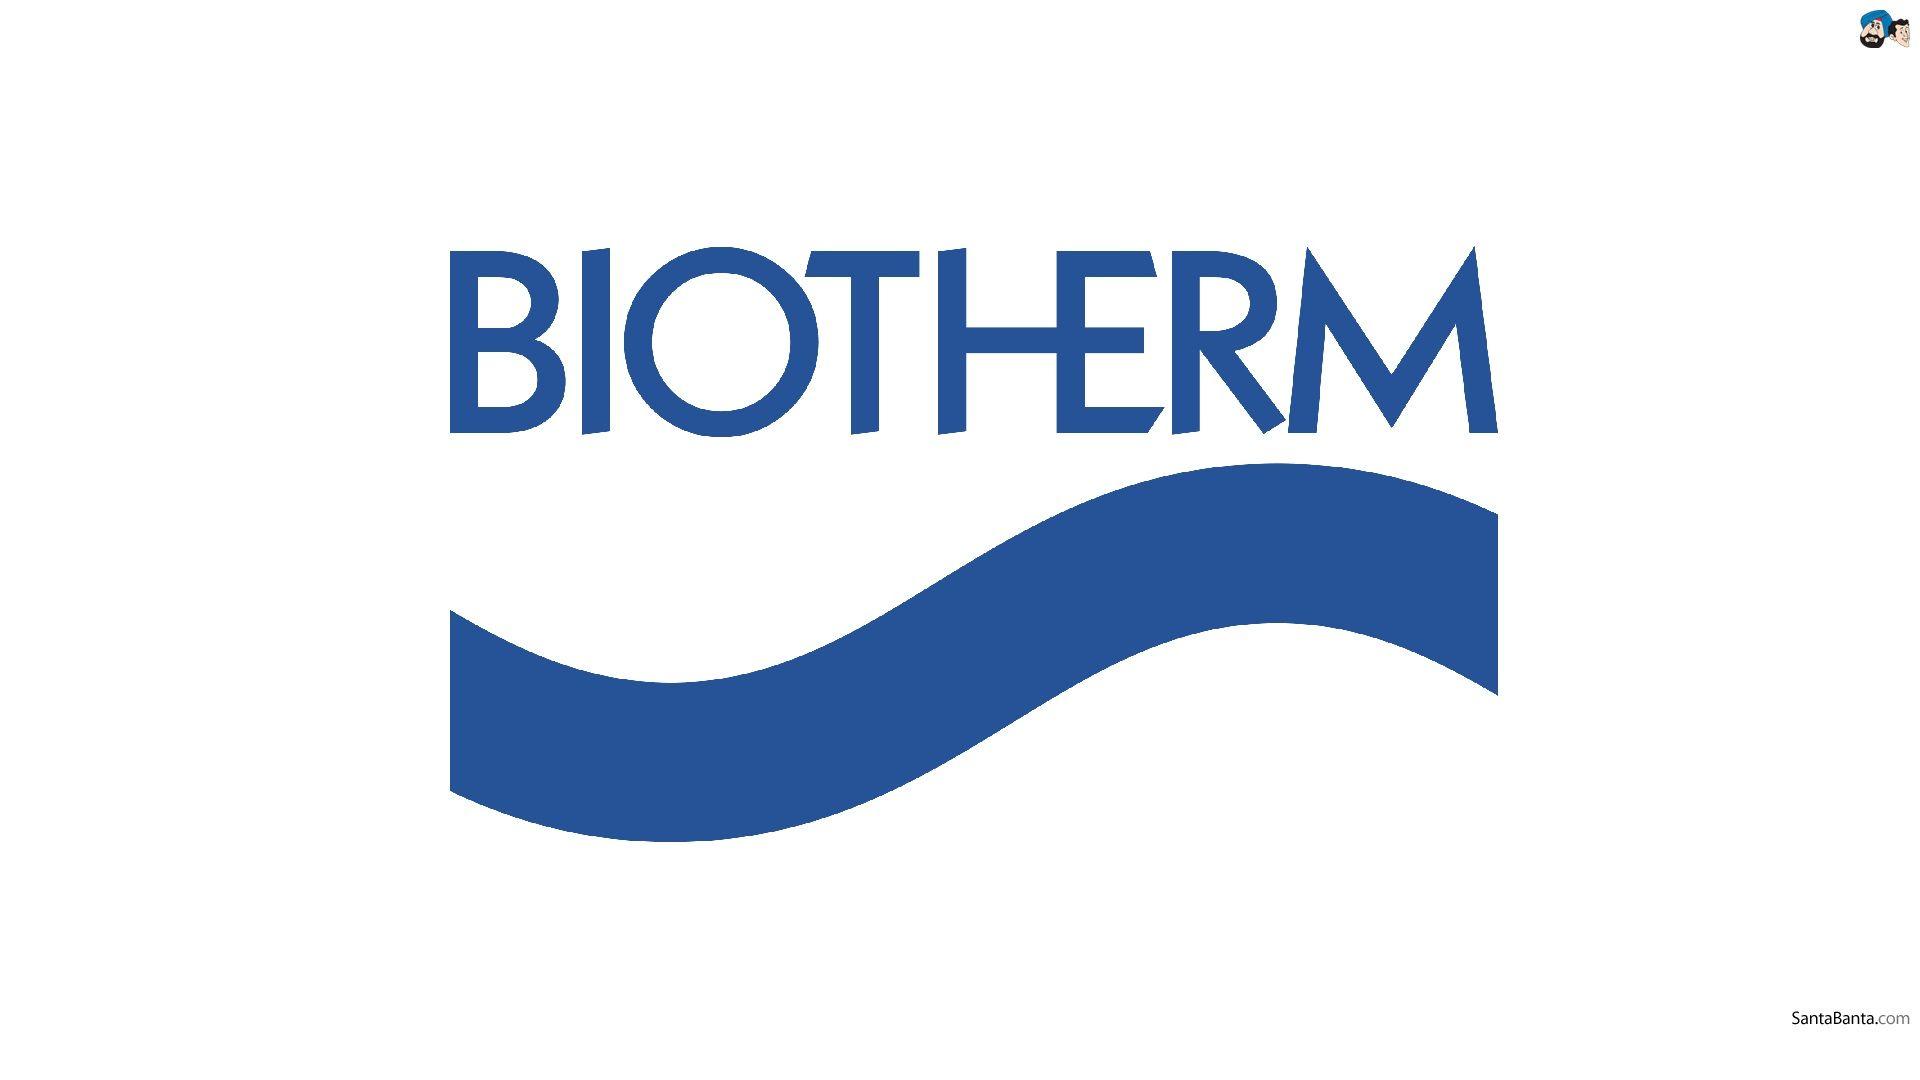 Biotherm Logo - Biotherm logo wallpaper SantaBanta.com Logos | SantaBanta.com ...